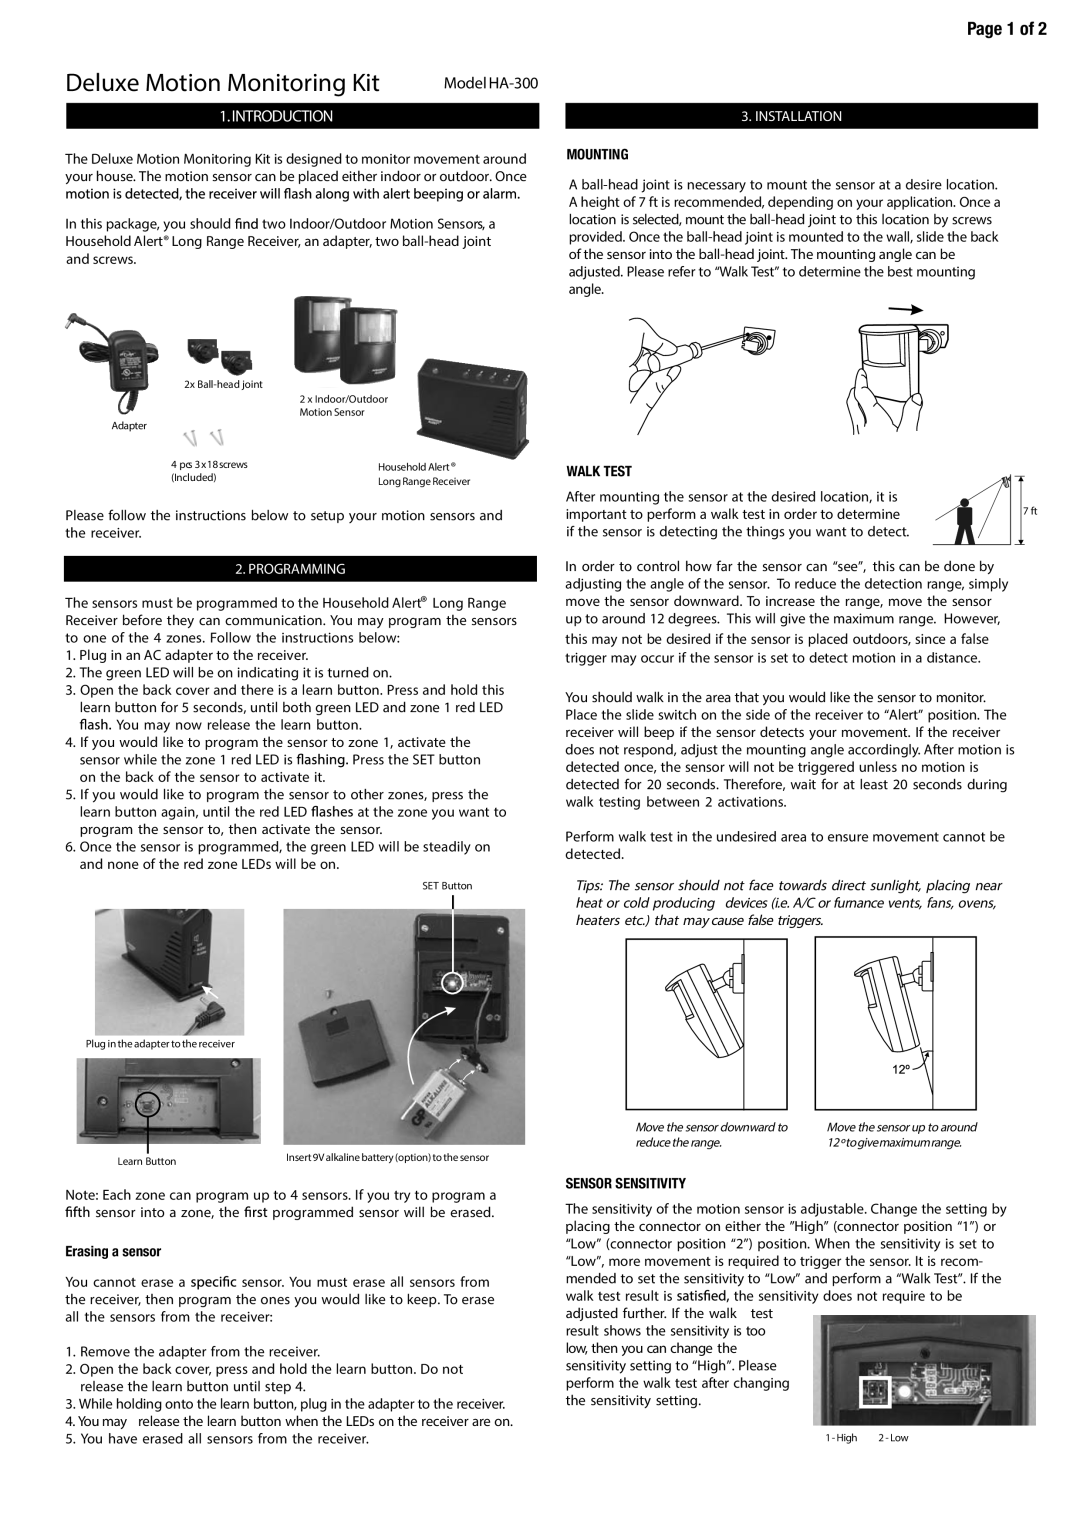 SkyLink HA-300 manual Page 1 of, Programming, Erasing a sensor, Installation, Mounting, Walk Test, Sensor Sensitivity 